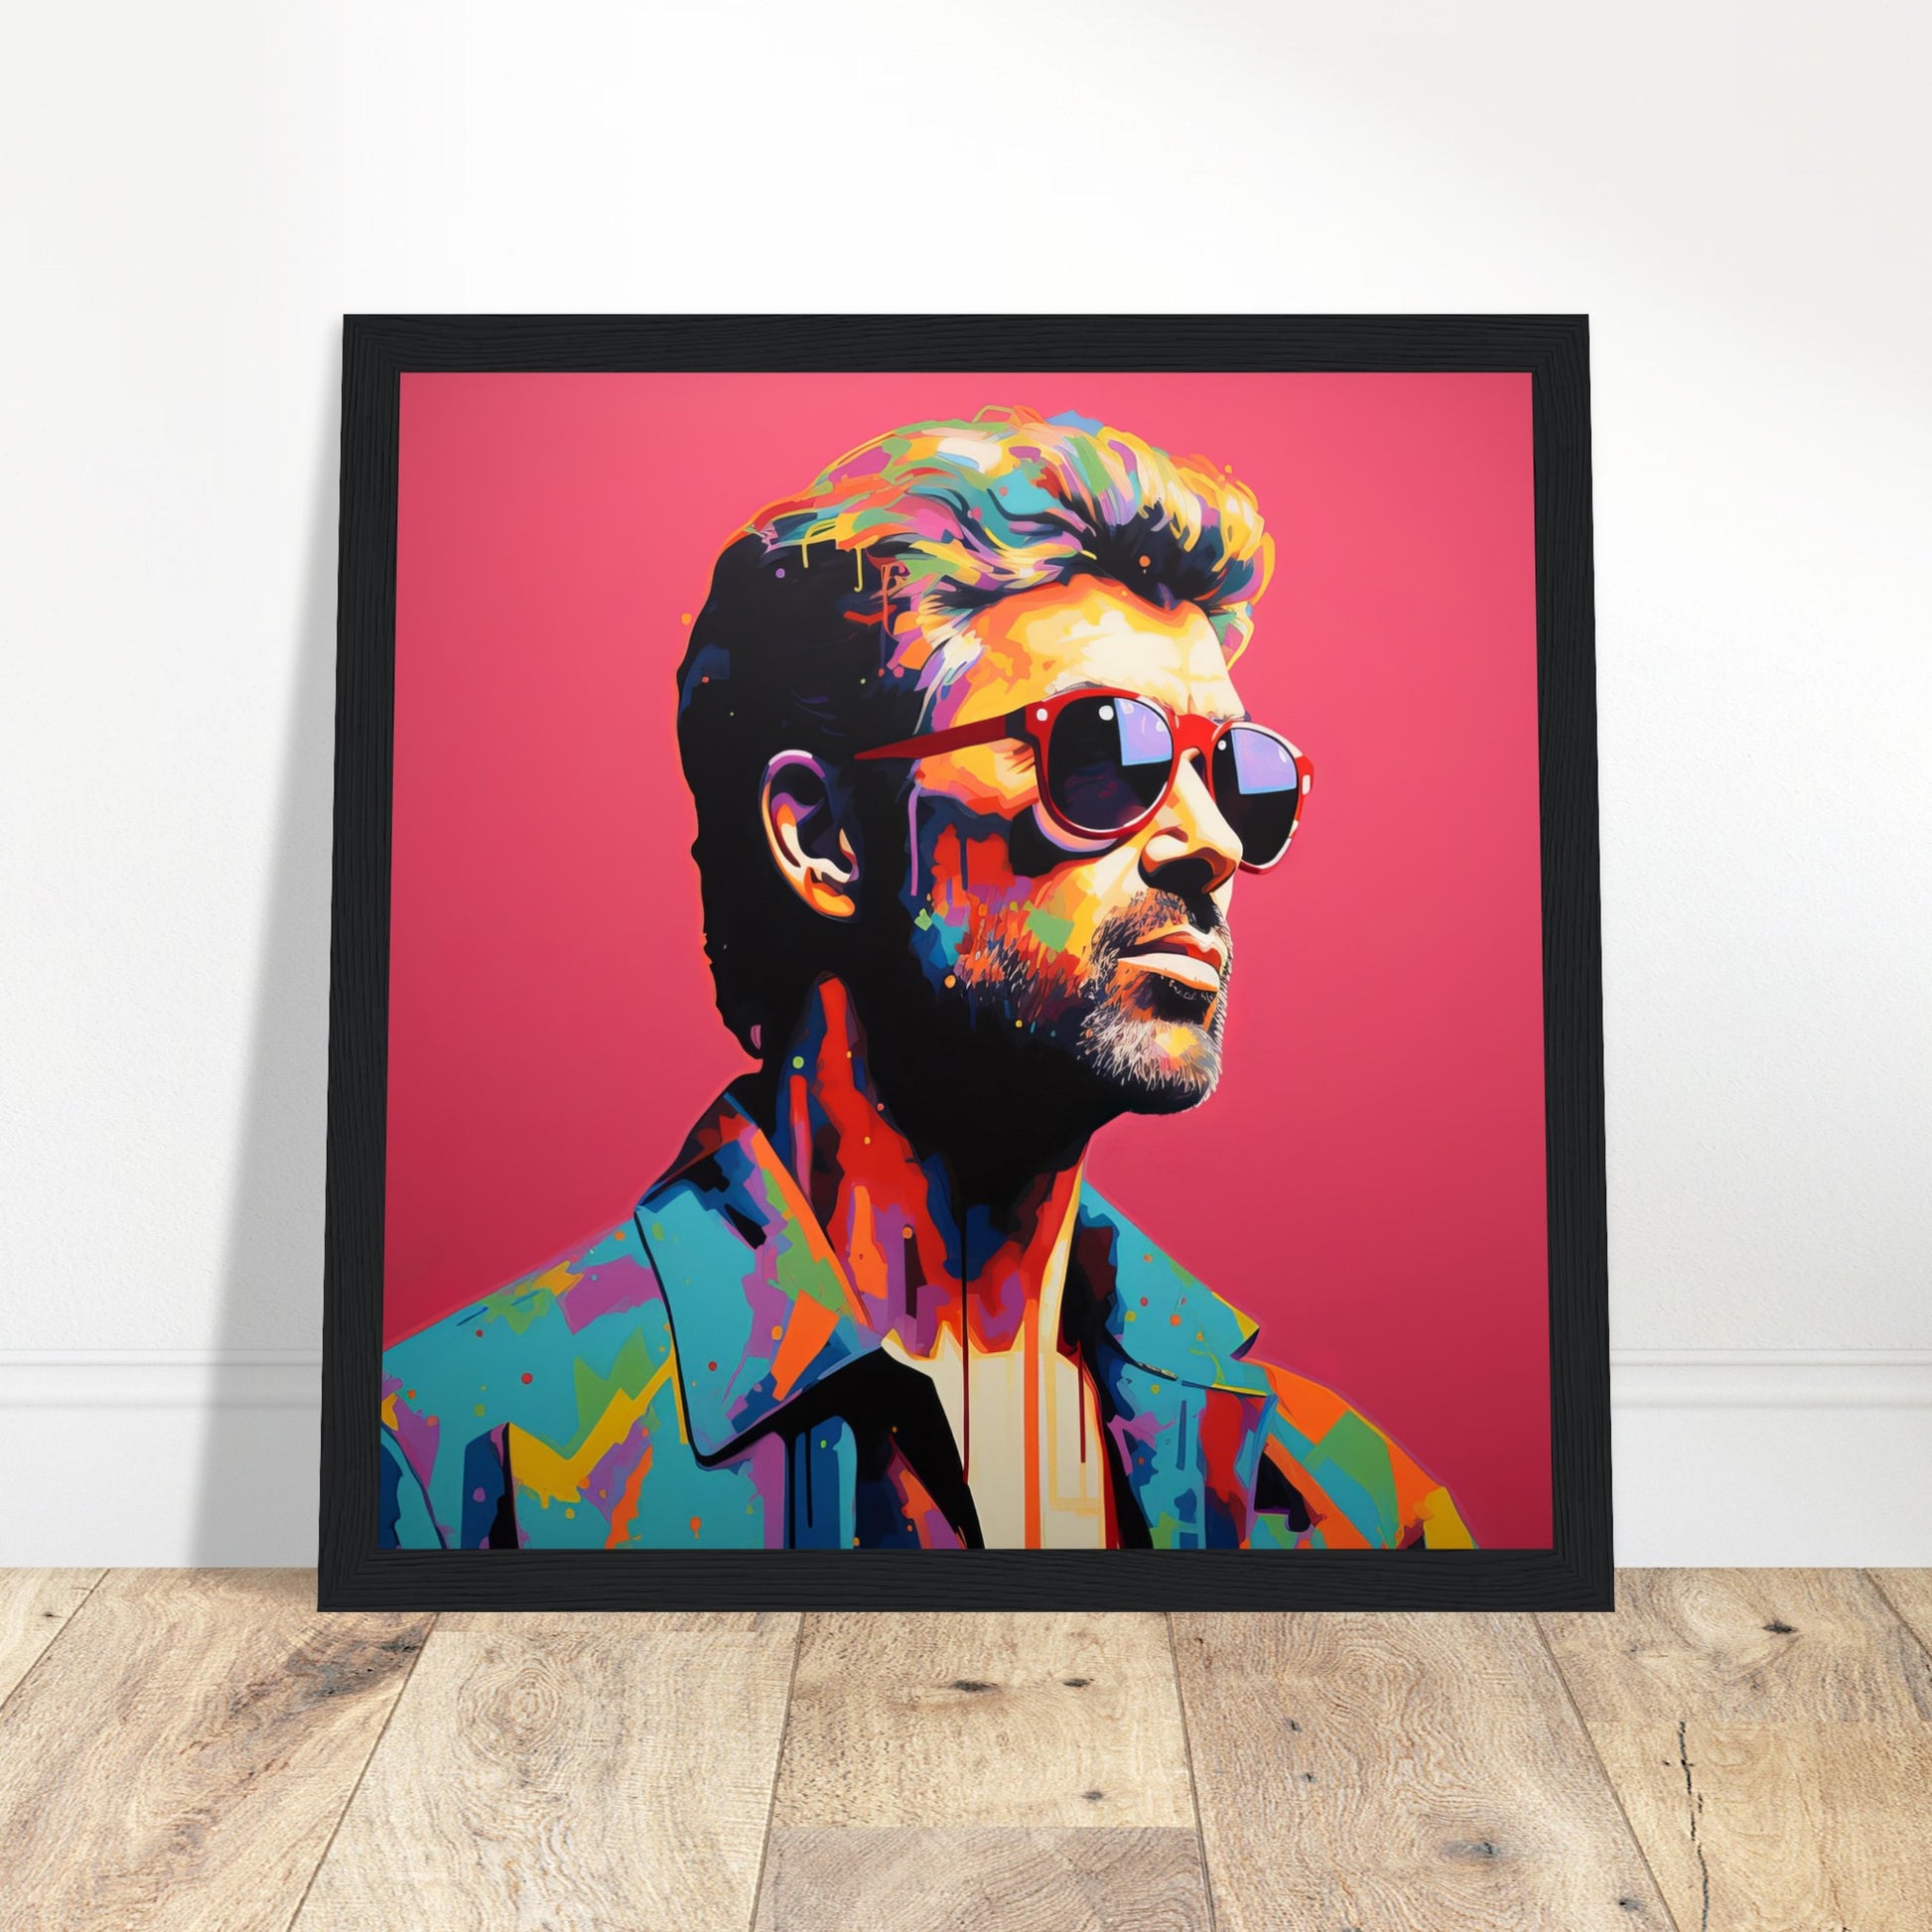 George Michael Artwork - Print Room Ltd Wood frame 70x70 cm / 28x28"